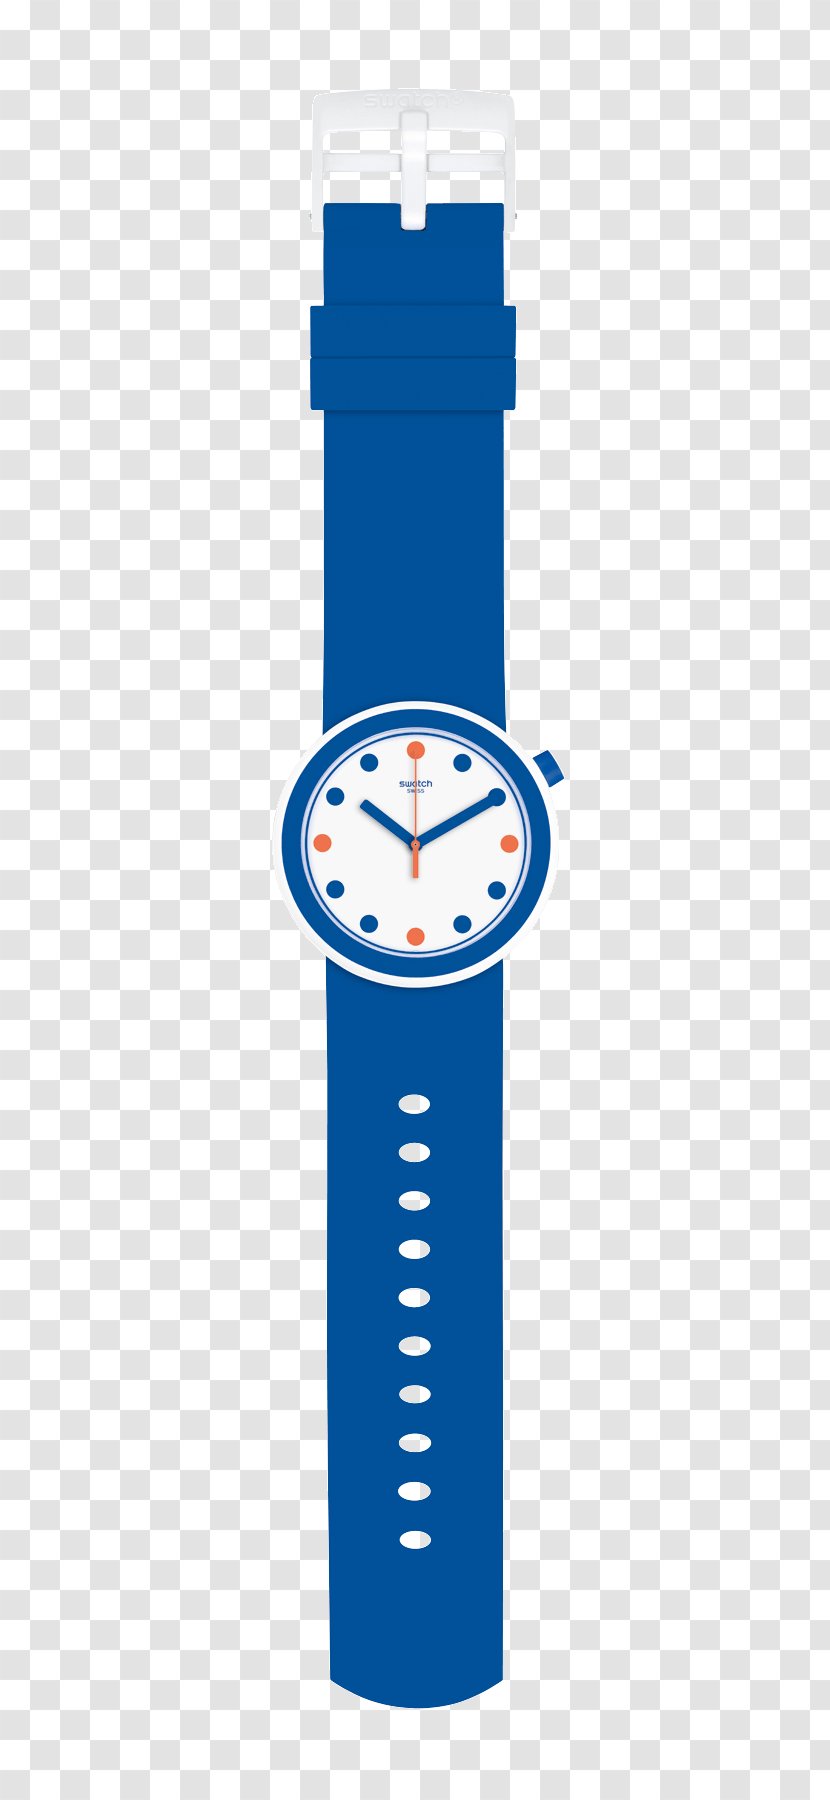 Watch Cartoon - Swatch - Wall Clock Electric Blue Transparent PNG